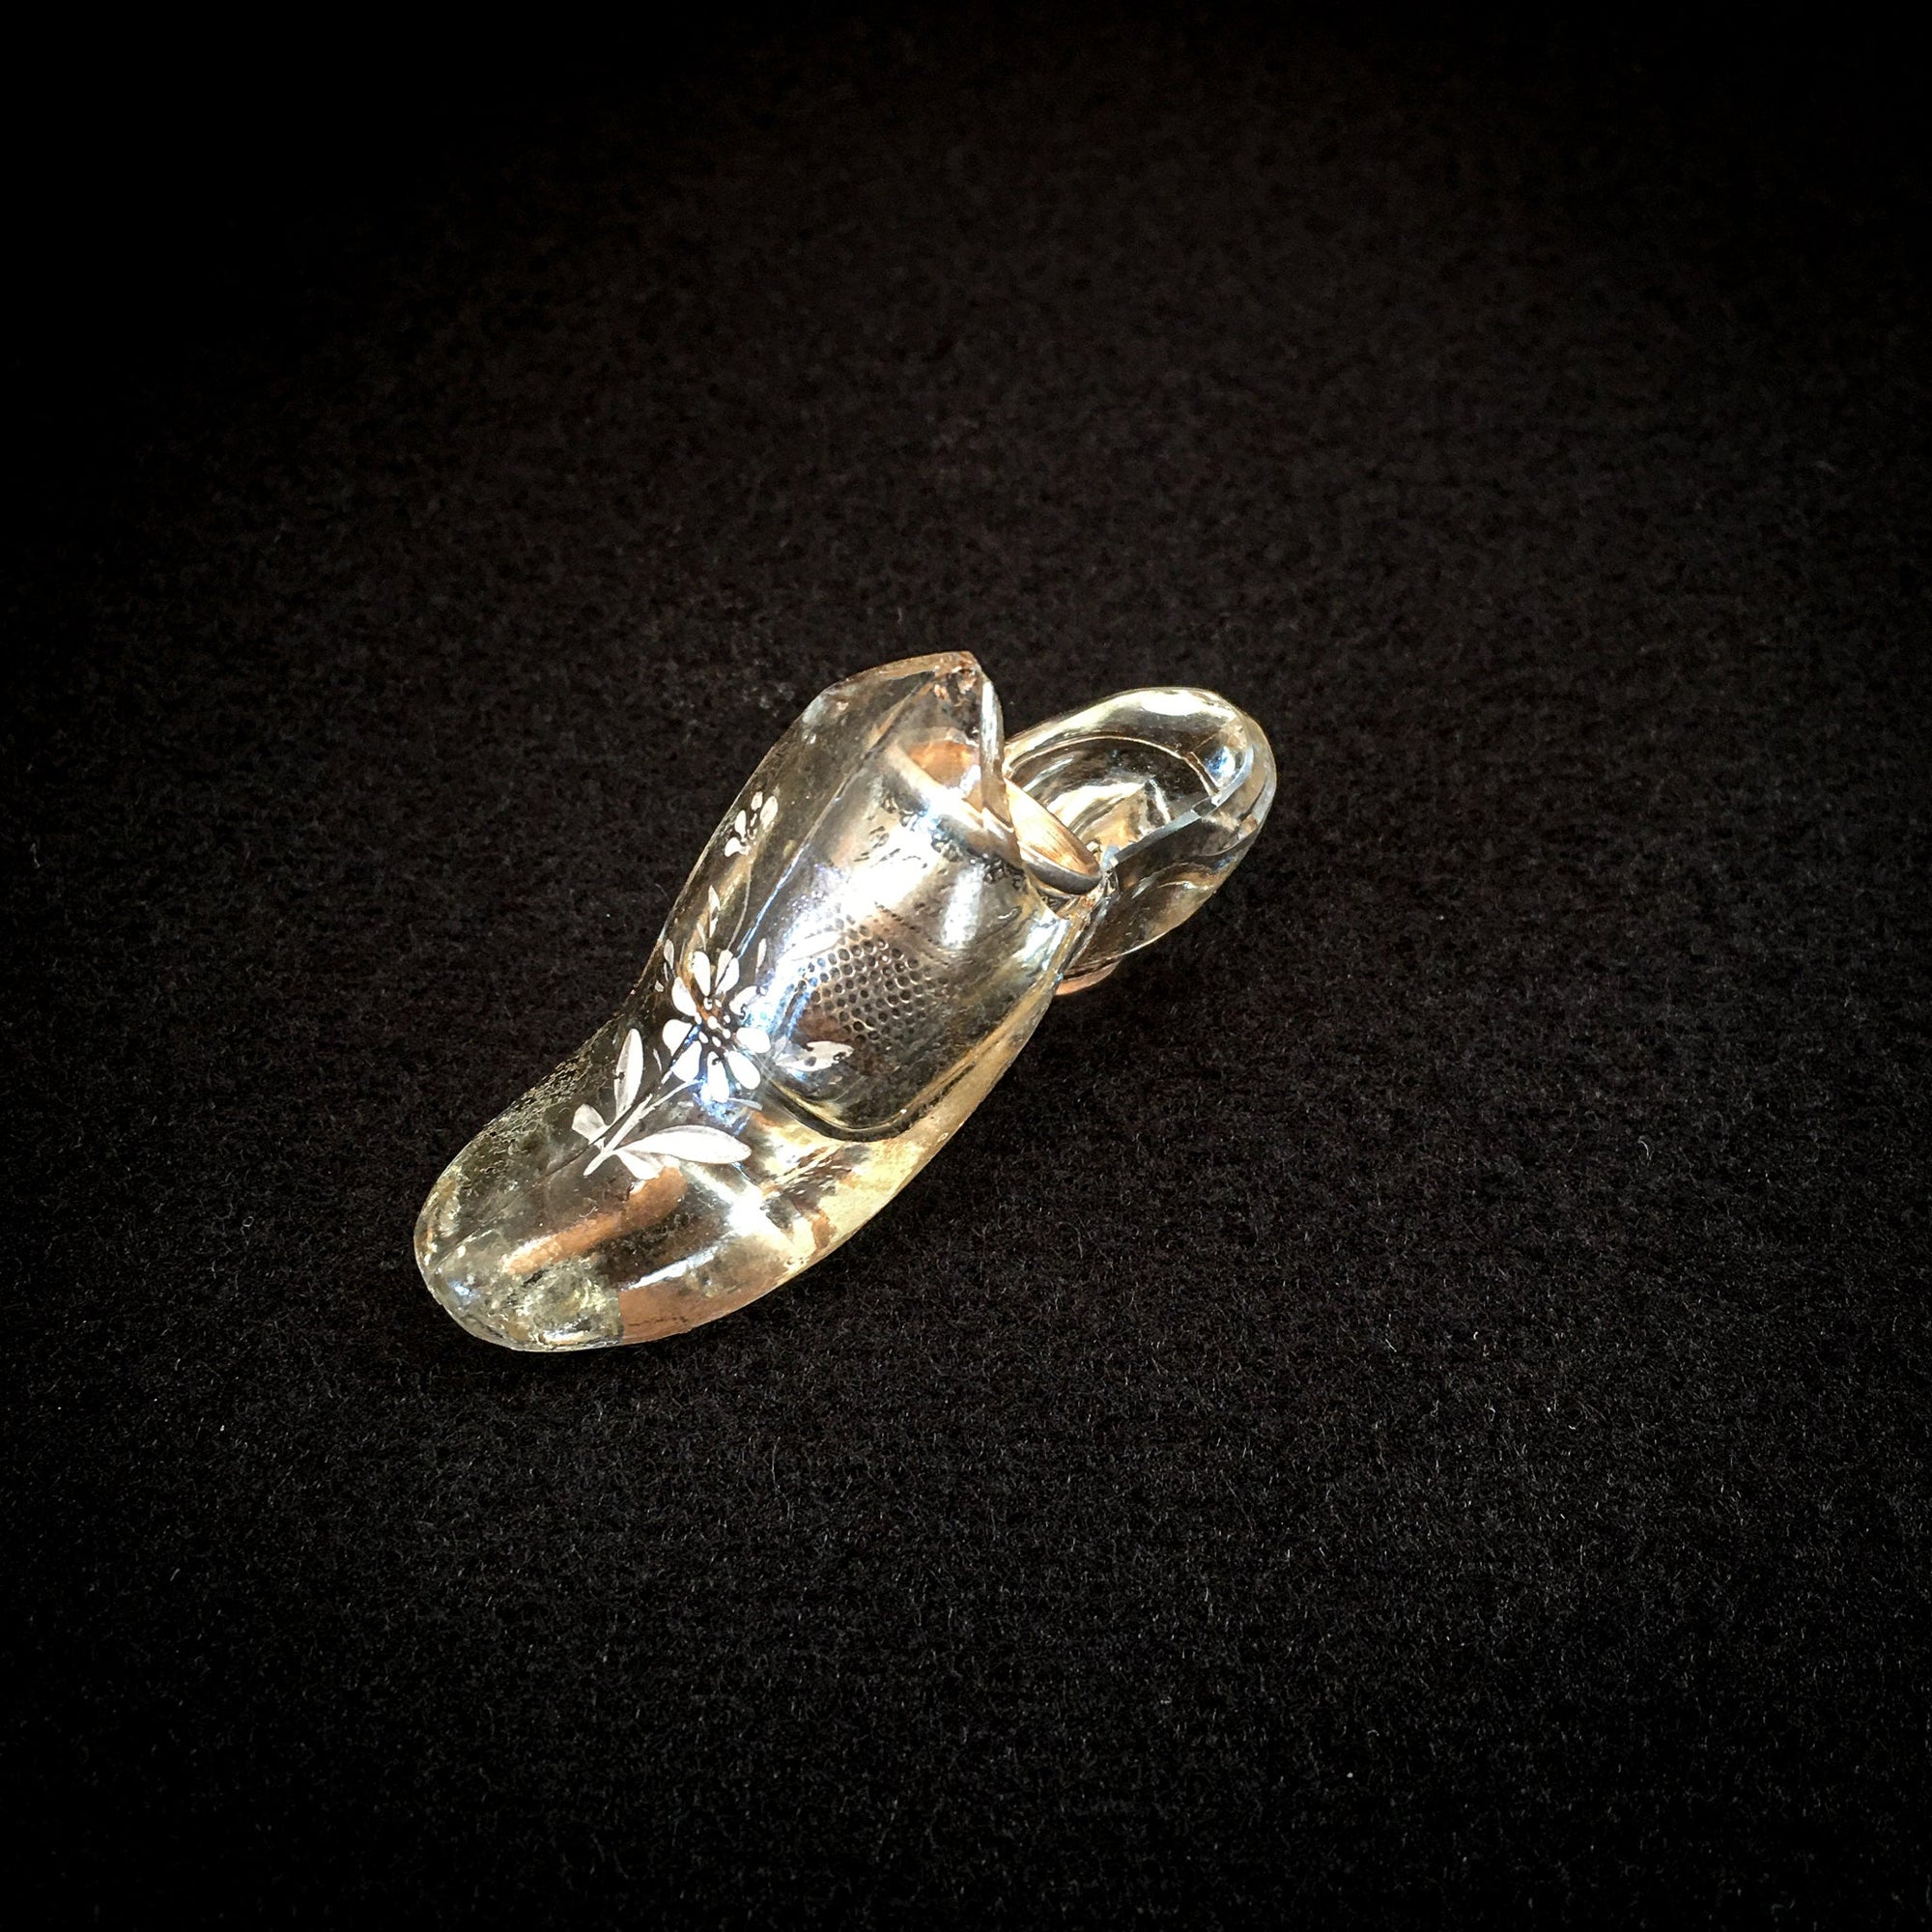 Vintage Glass Slipper Thimble Holder with Thimble, Size 6, Engraved “M.E.M.”